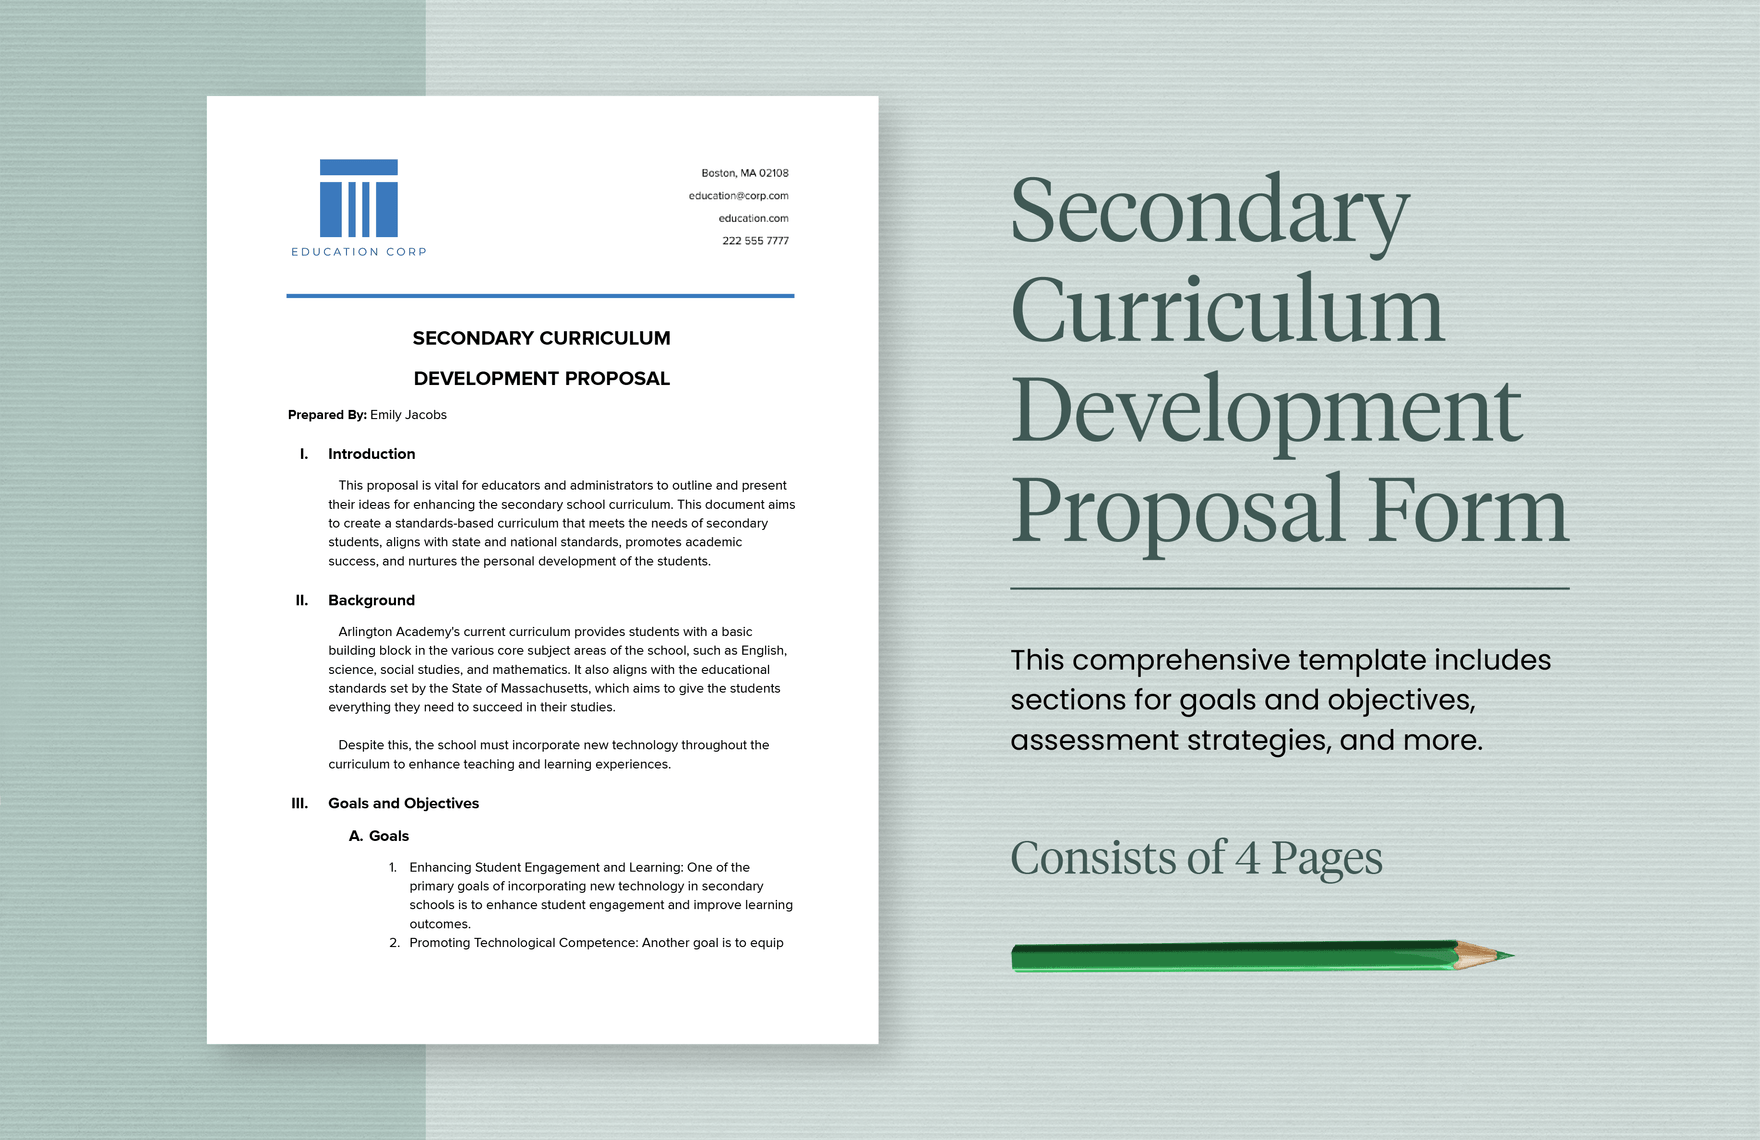 Secondary Curriculum Development Proposal Form in Word, Google Docs